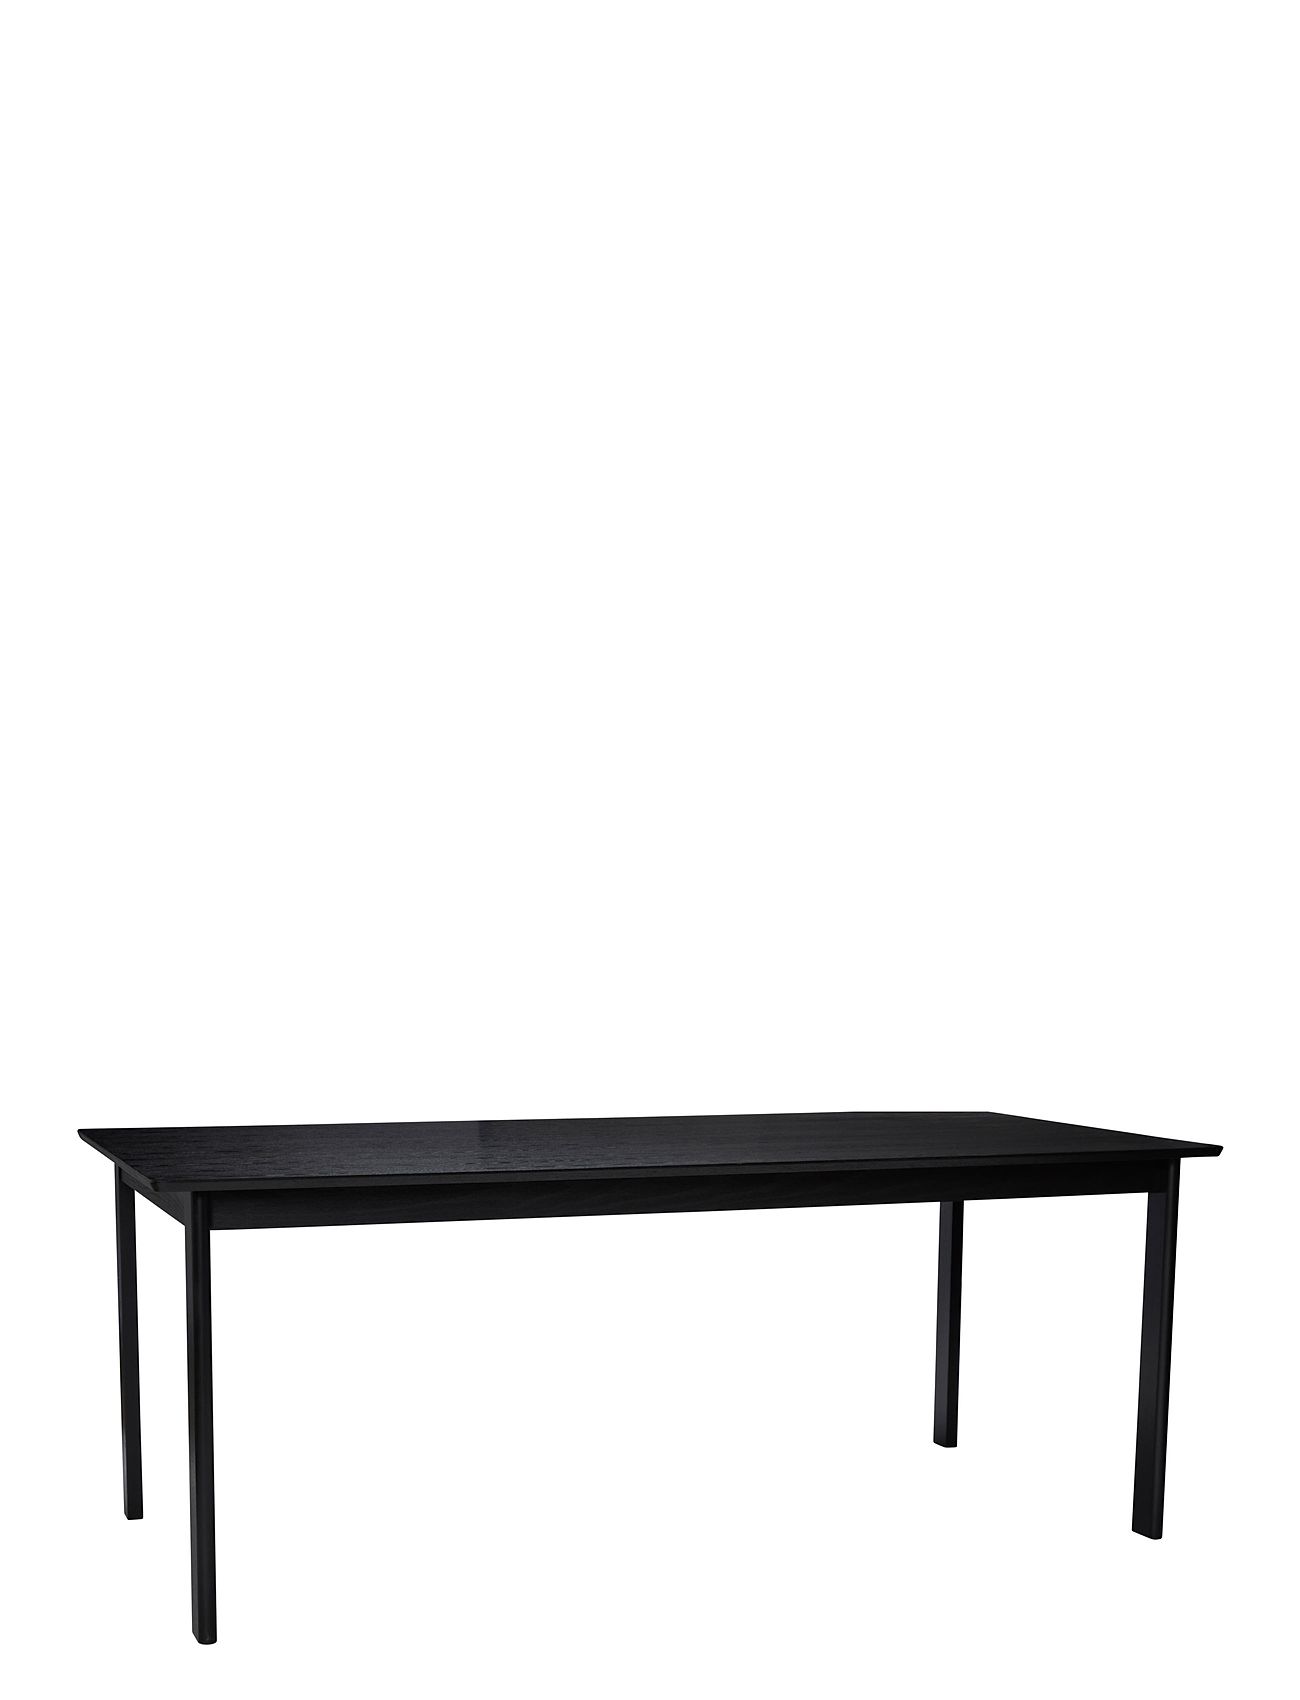 Dapper Dining Table Square Black Home Furniture Tables Dining Tables Black Hübsch